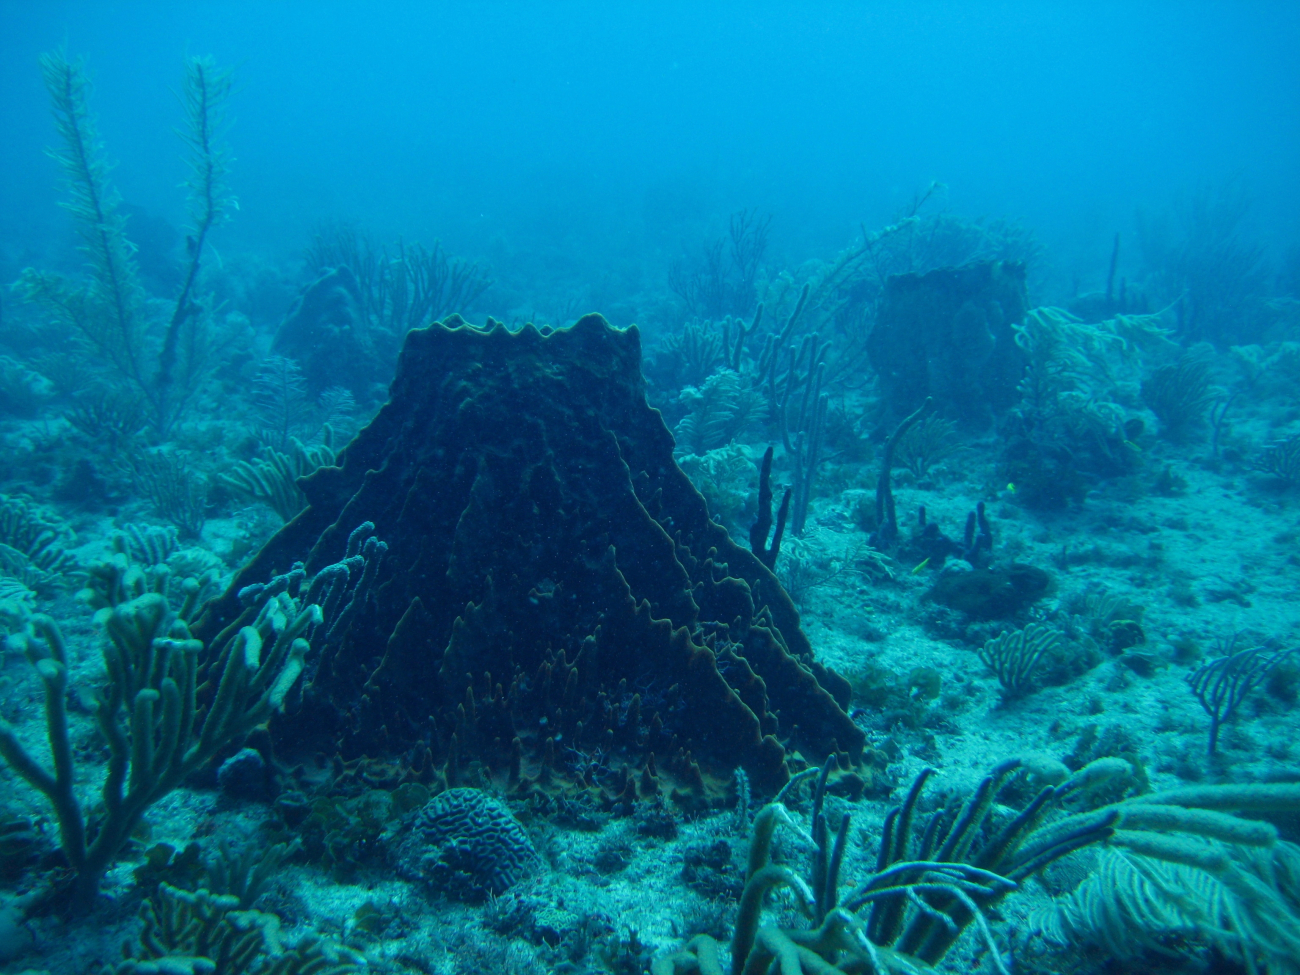 Large barrel sponge (Porifera spp) looking like a Mayan pyramid